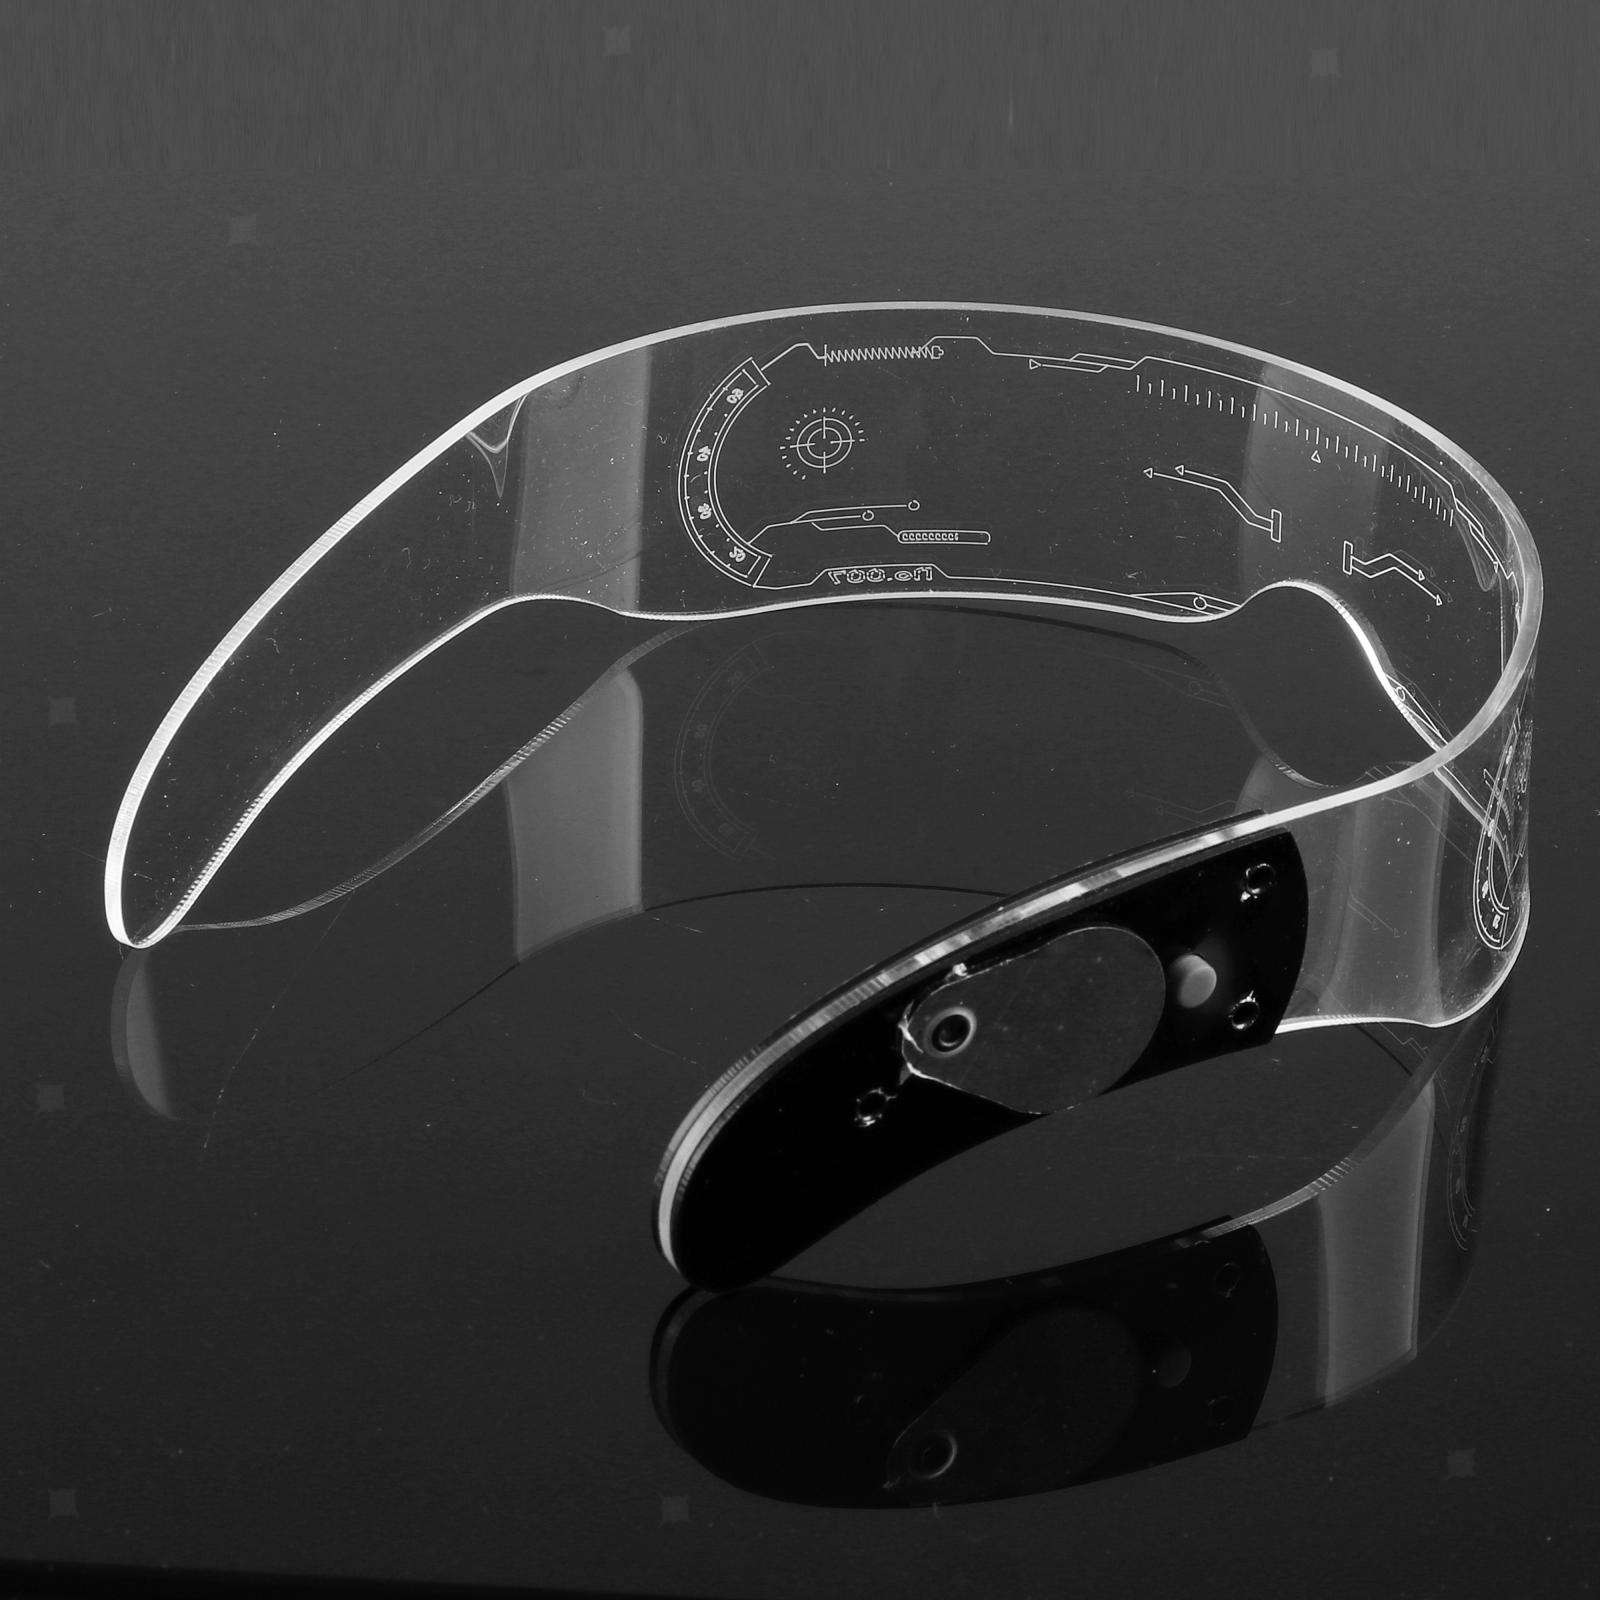 Futuristic LED Glasses 7 Colors Light Up Eyeglasses Monoblock Shield Club